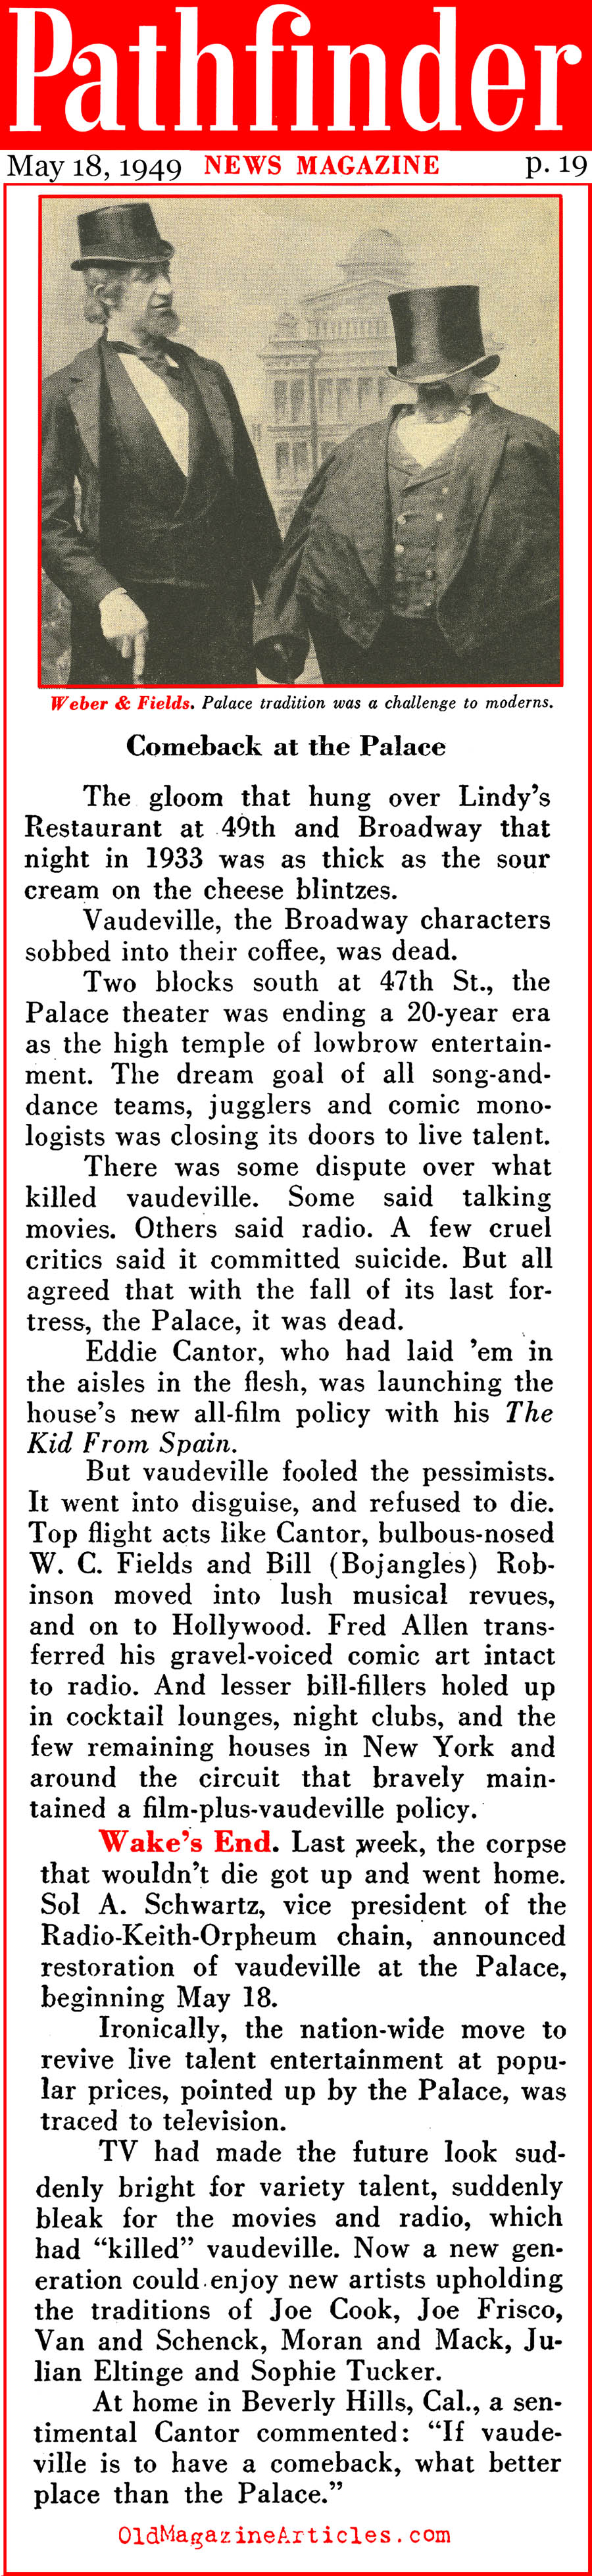 Vaudeville at the Palace Theater - Again (Pathfinder, 1949)